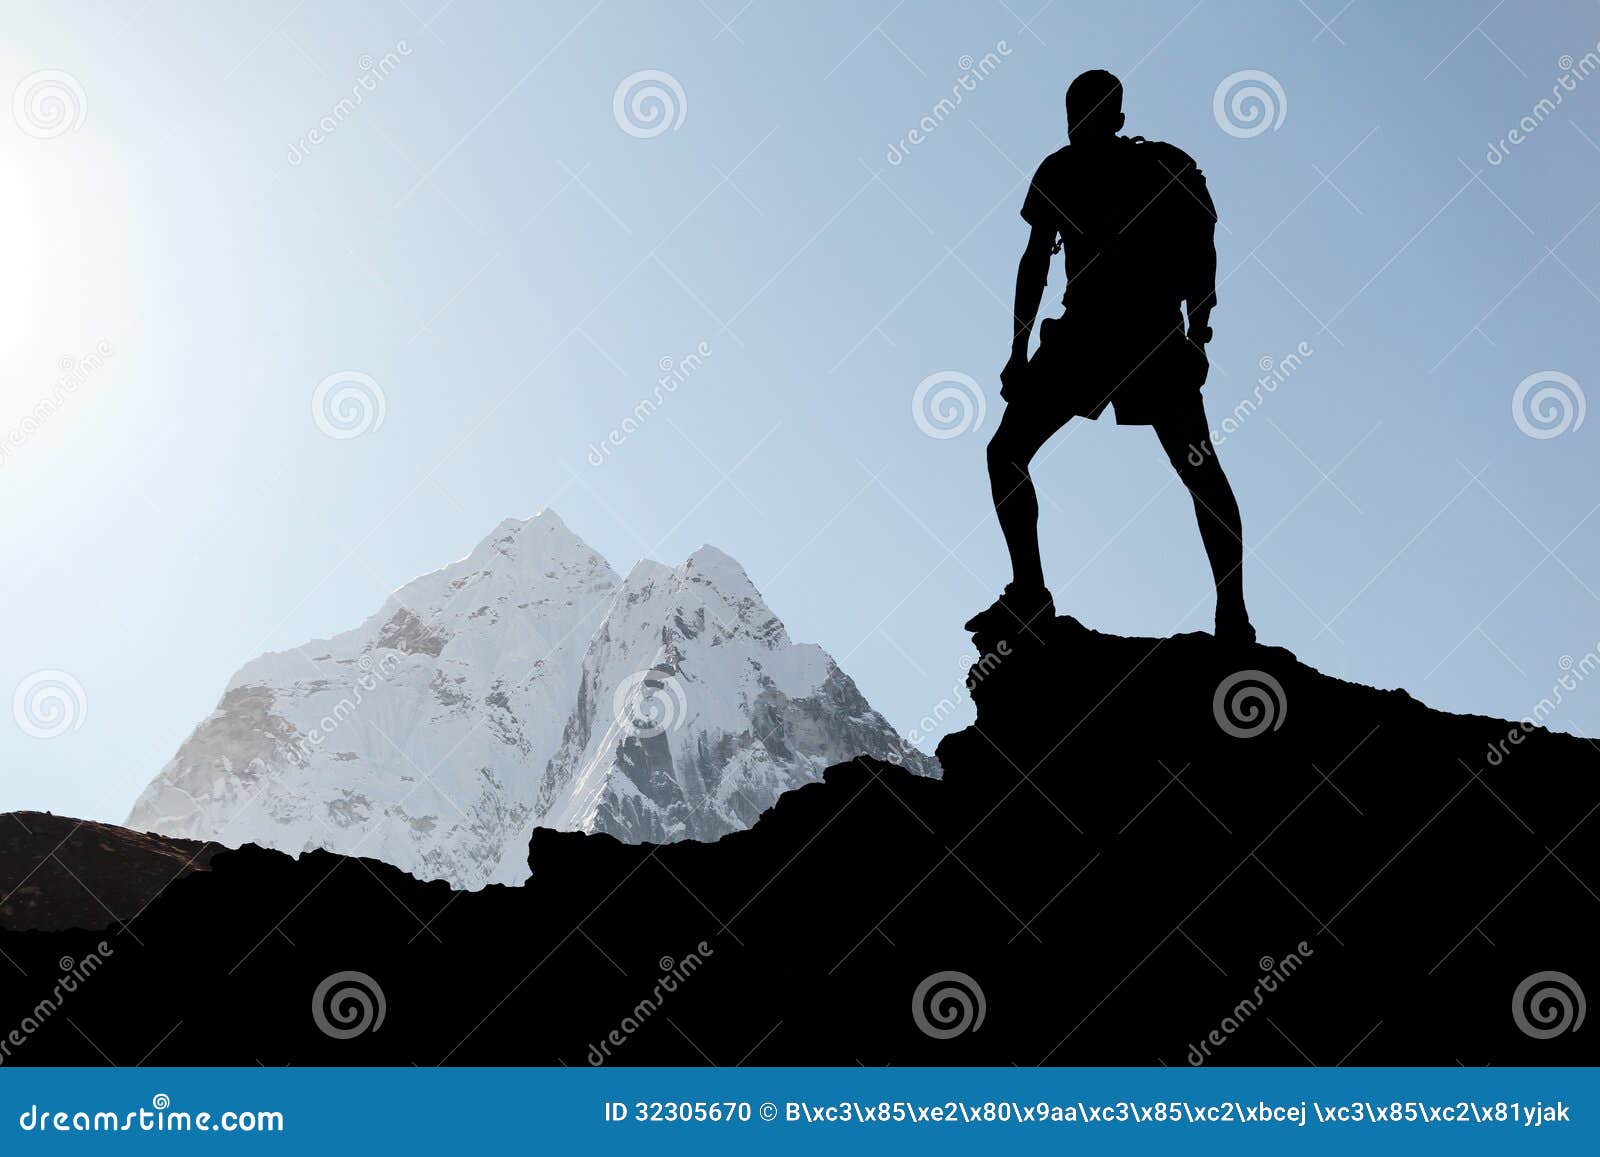 clipart man on mountain top - photo #22